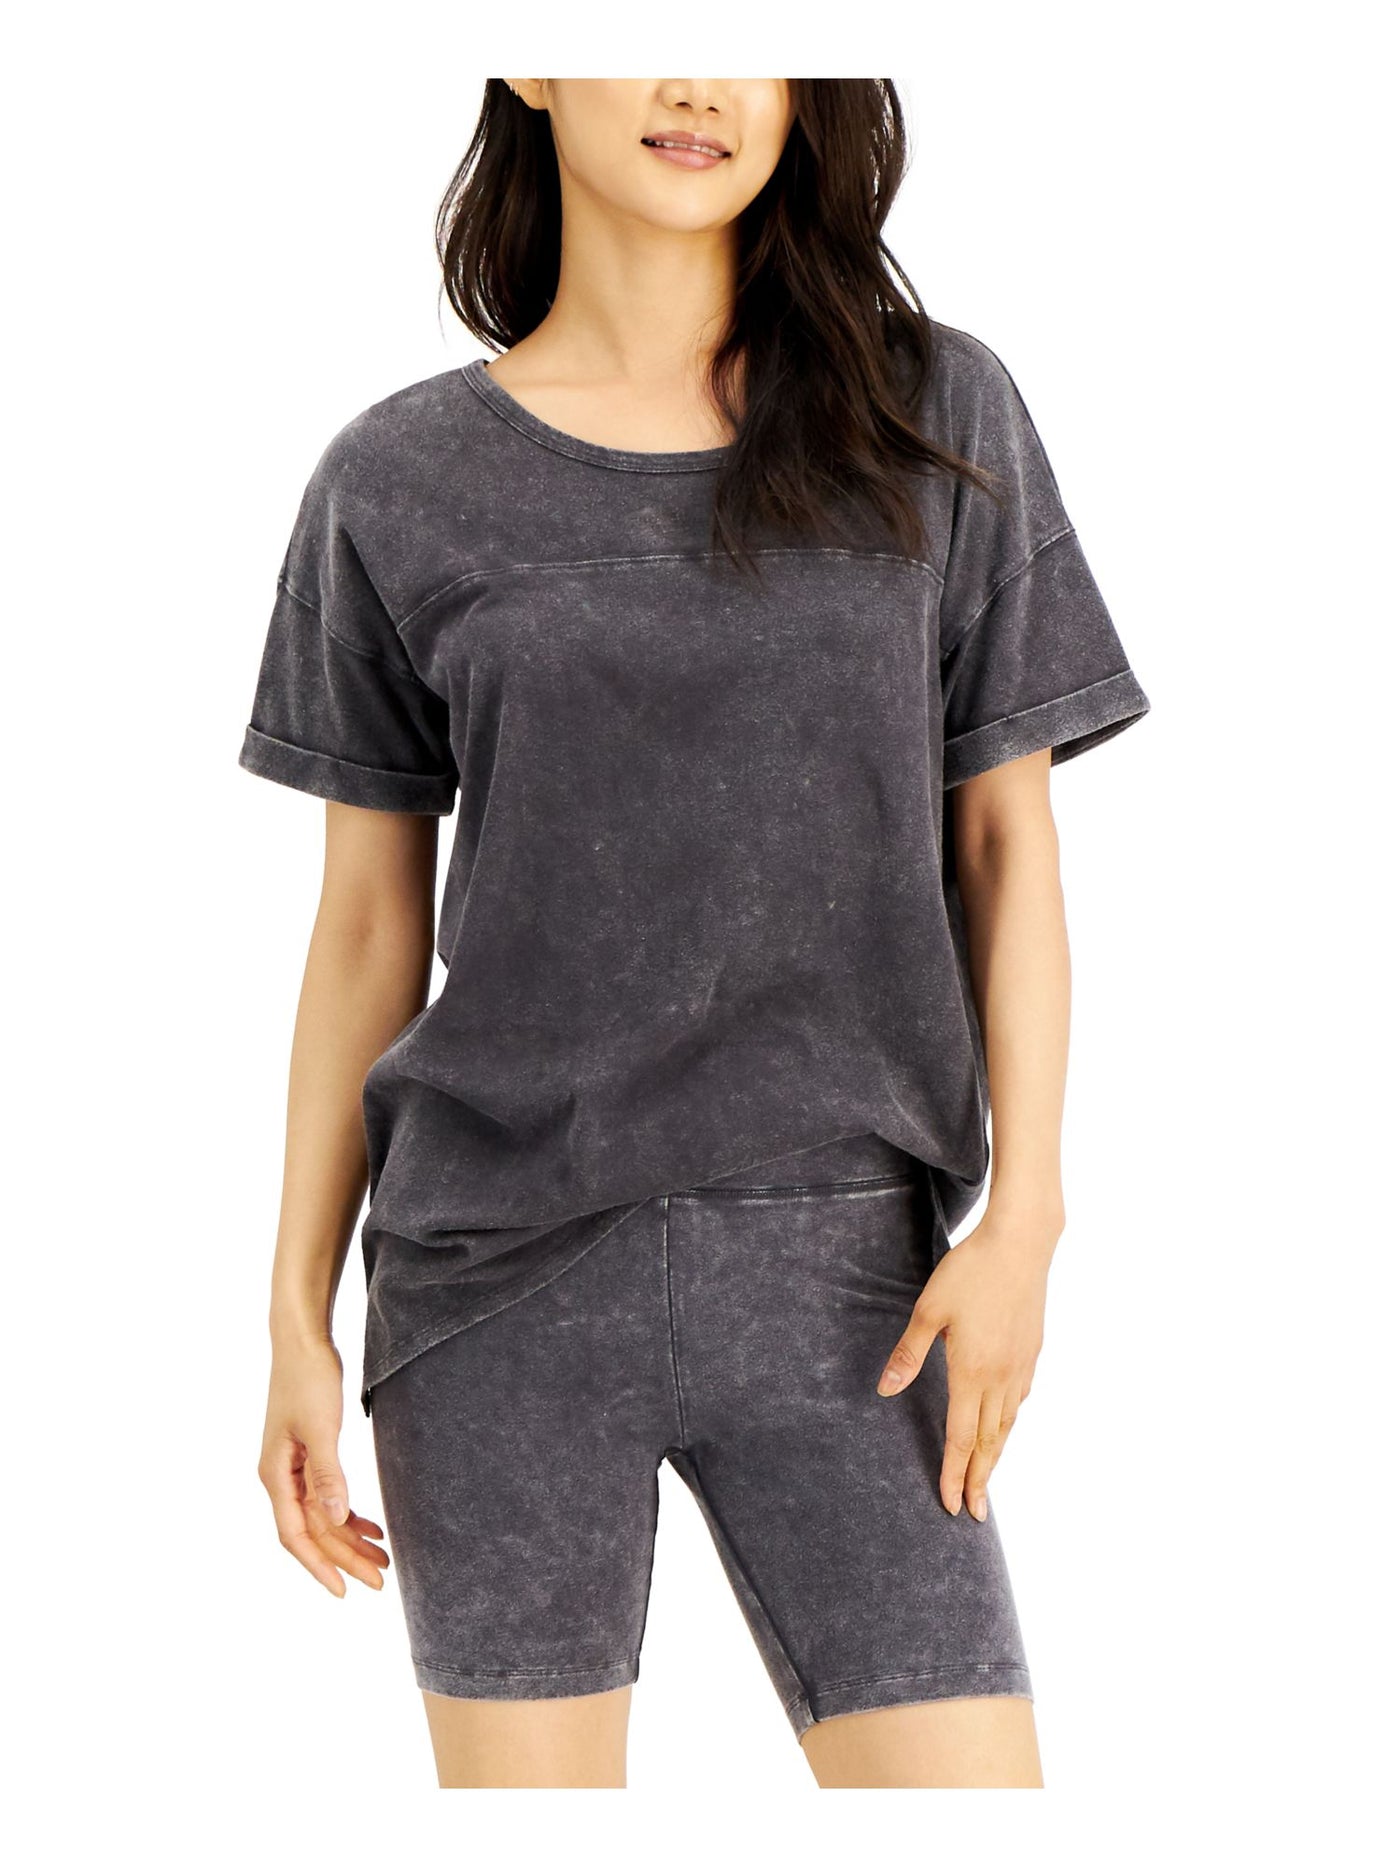 HIPPIE ROSE Womens Gray Short Sleeve Jewel Neck T-Shirt Juniors M